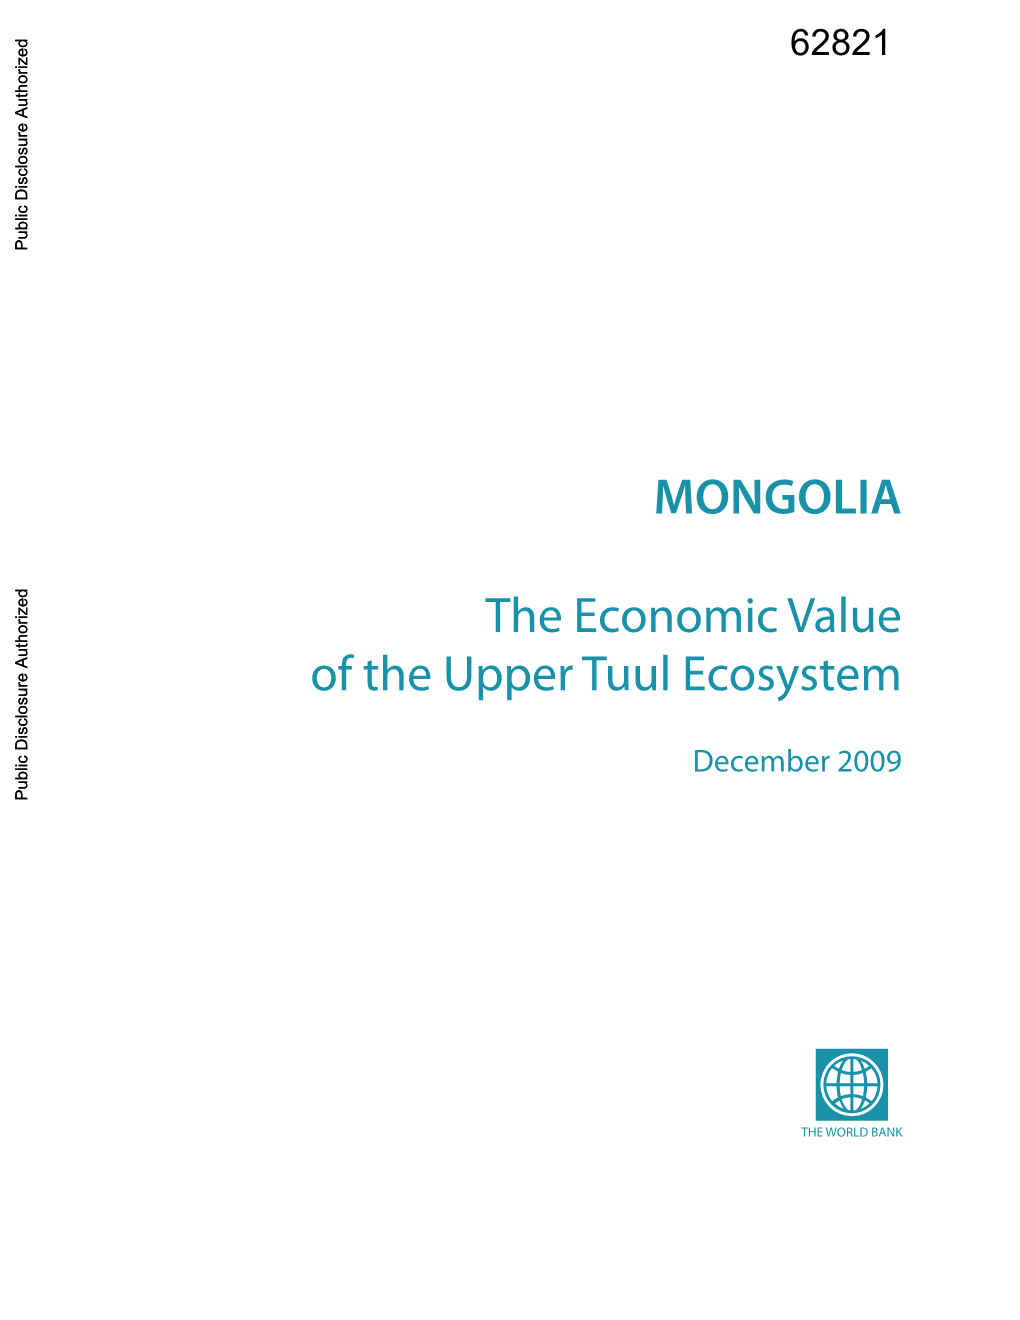 MONGOLIA Public Disclosure Authorized